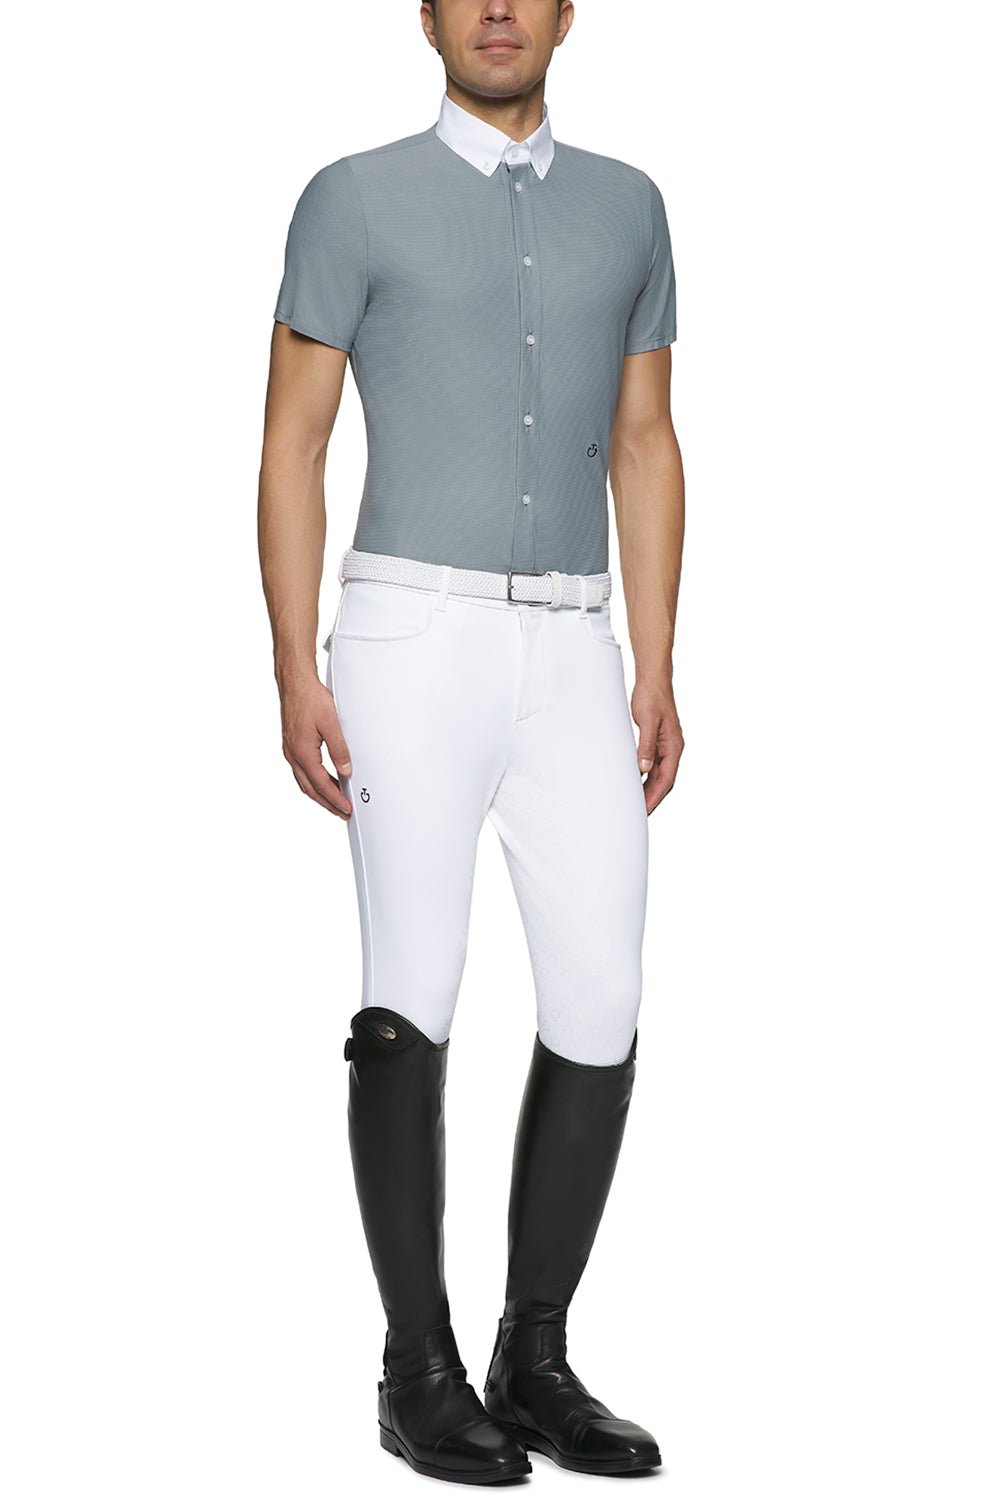 Cavalleria Toscana Men's button-down short-sleeved shirt